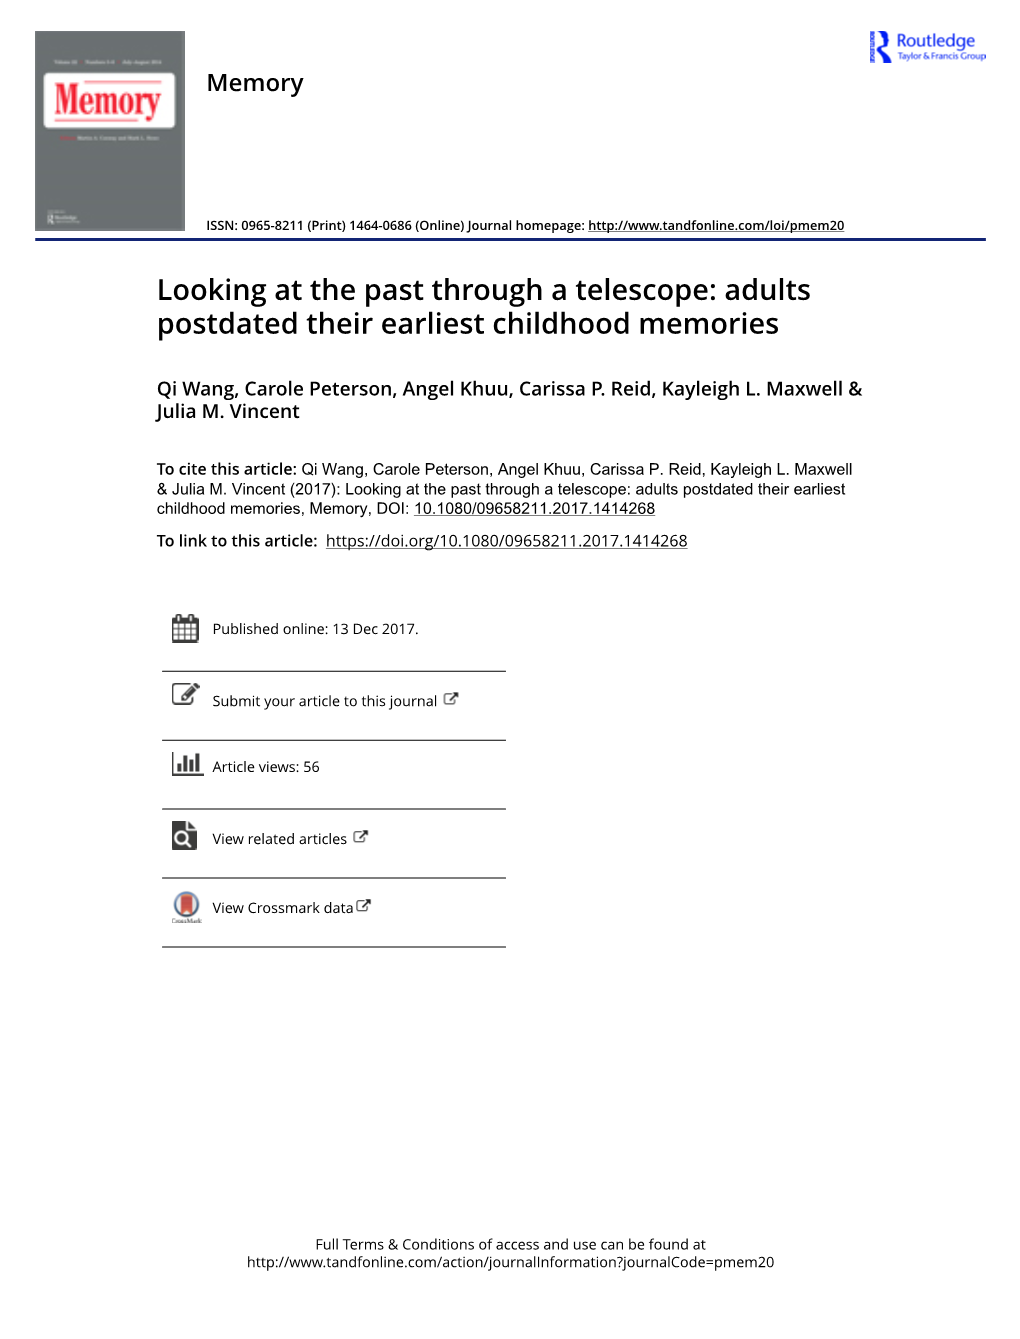 Adults Postdated Their Earliest Childhood Memories